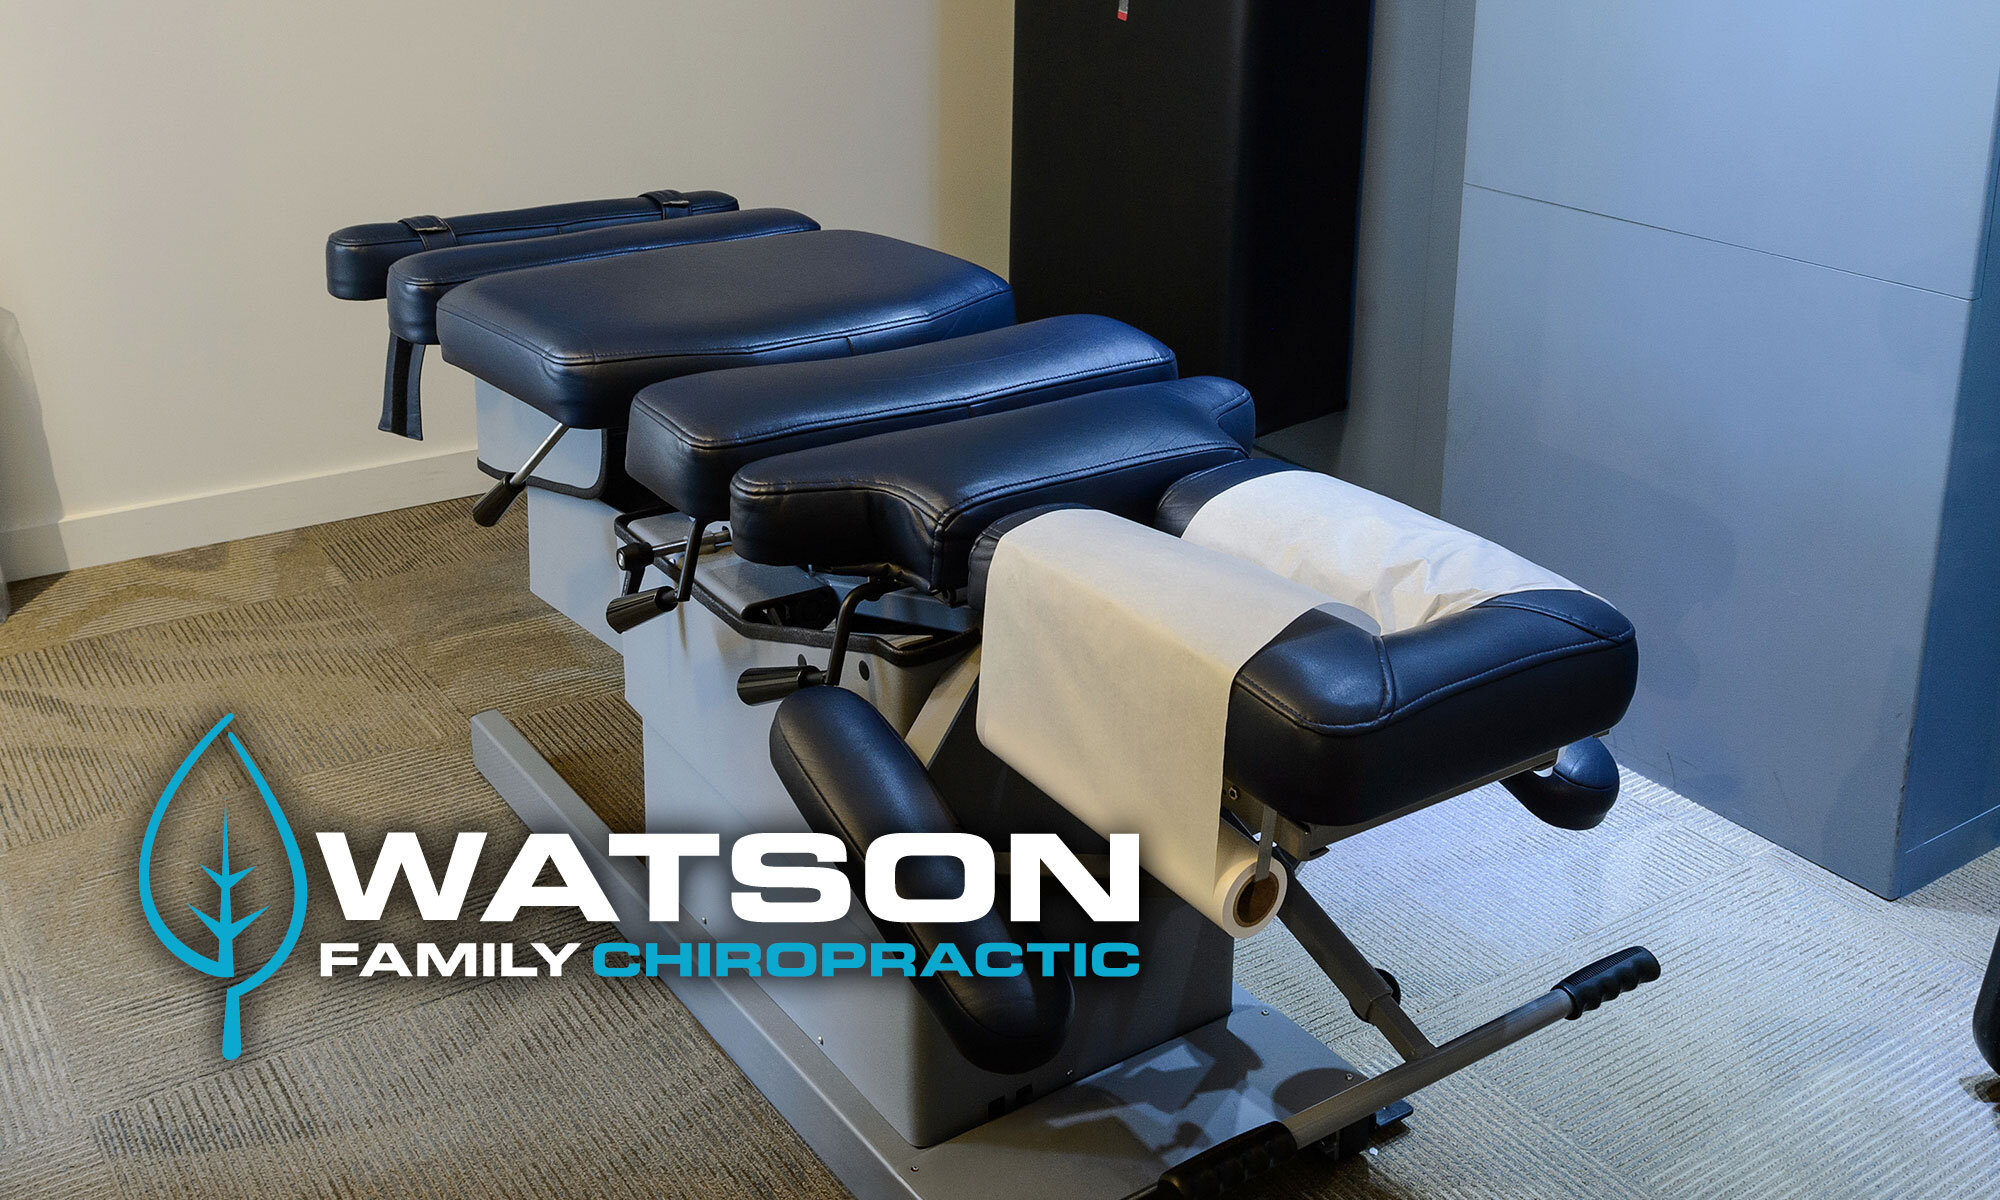  Treatment bed at Watson Family Chiropratic 